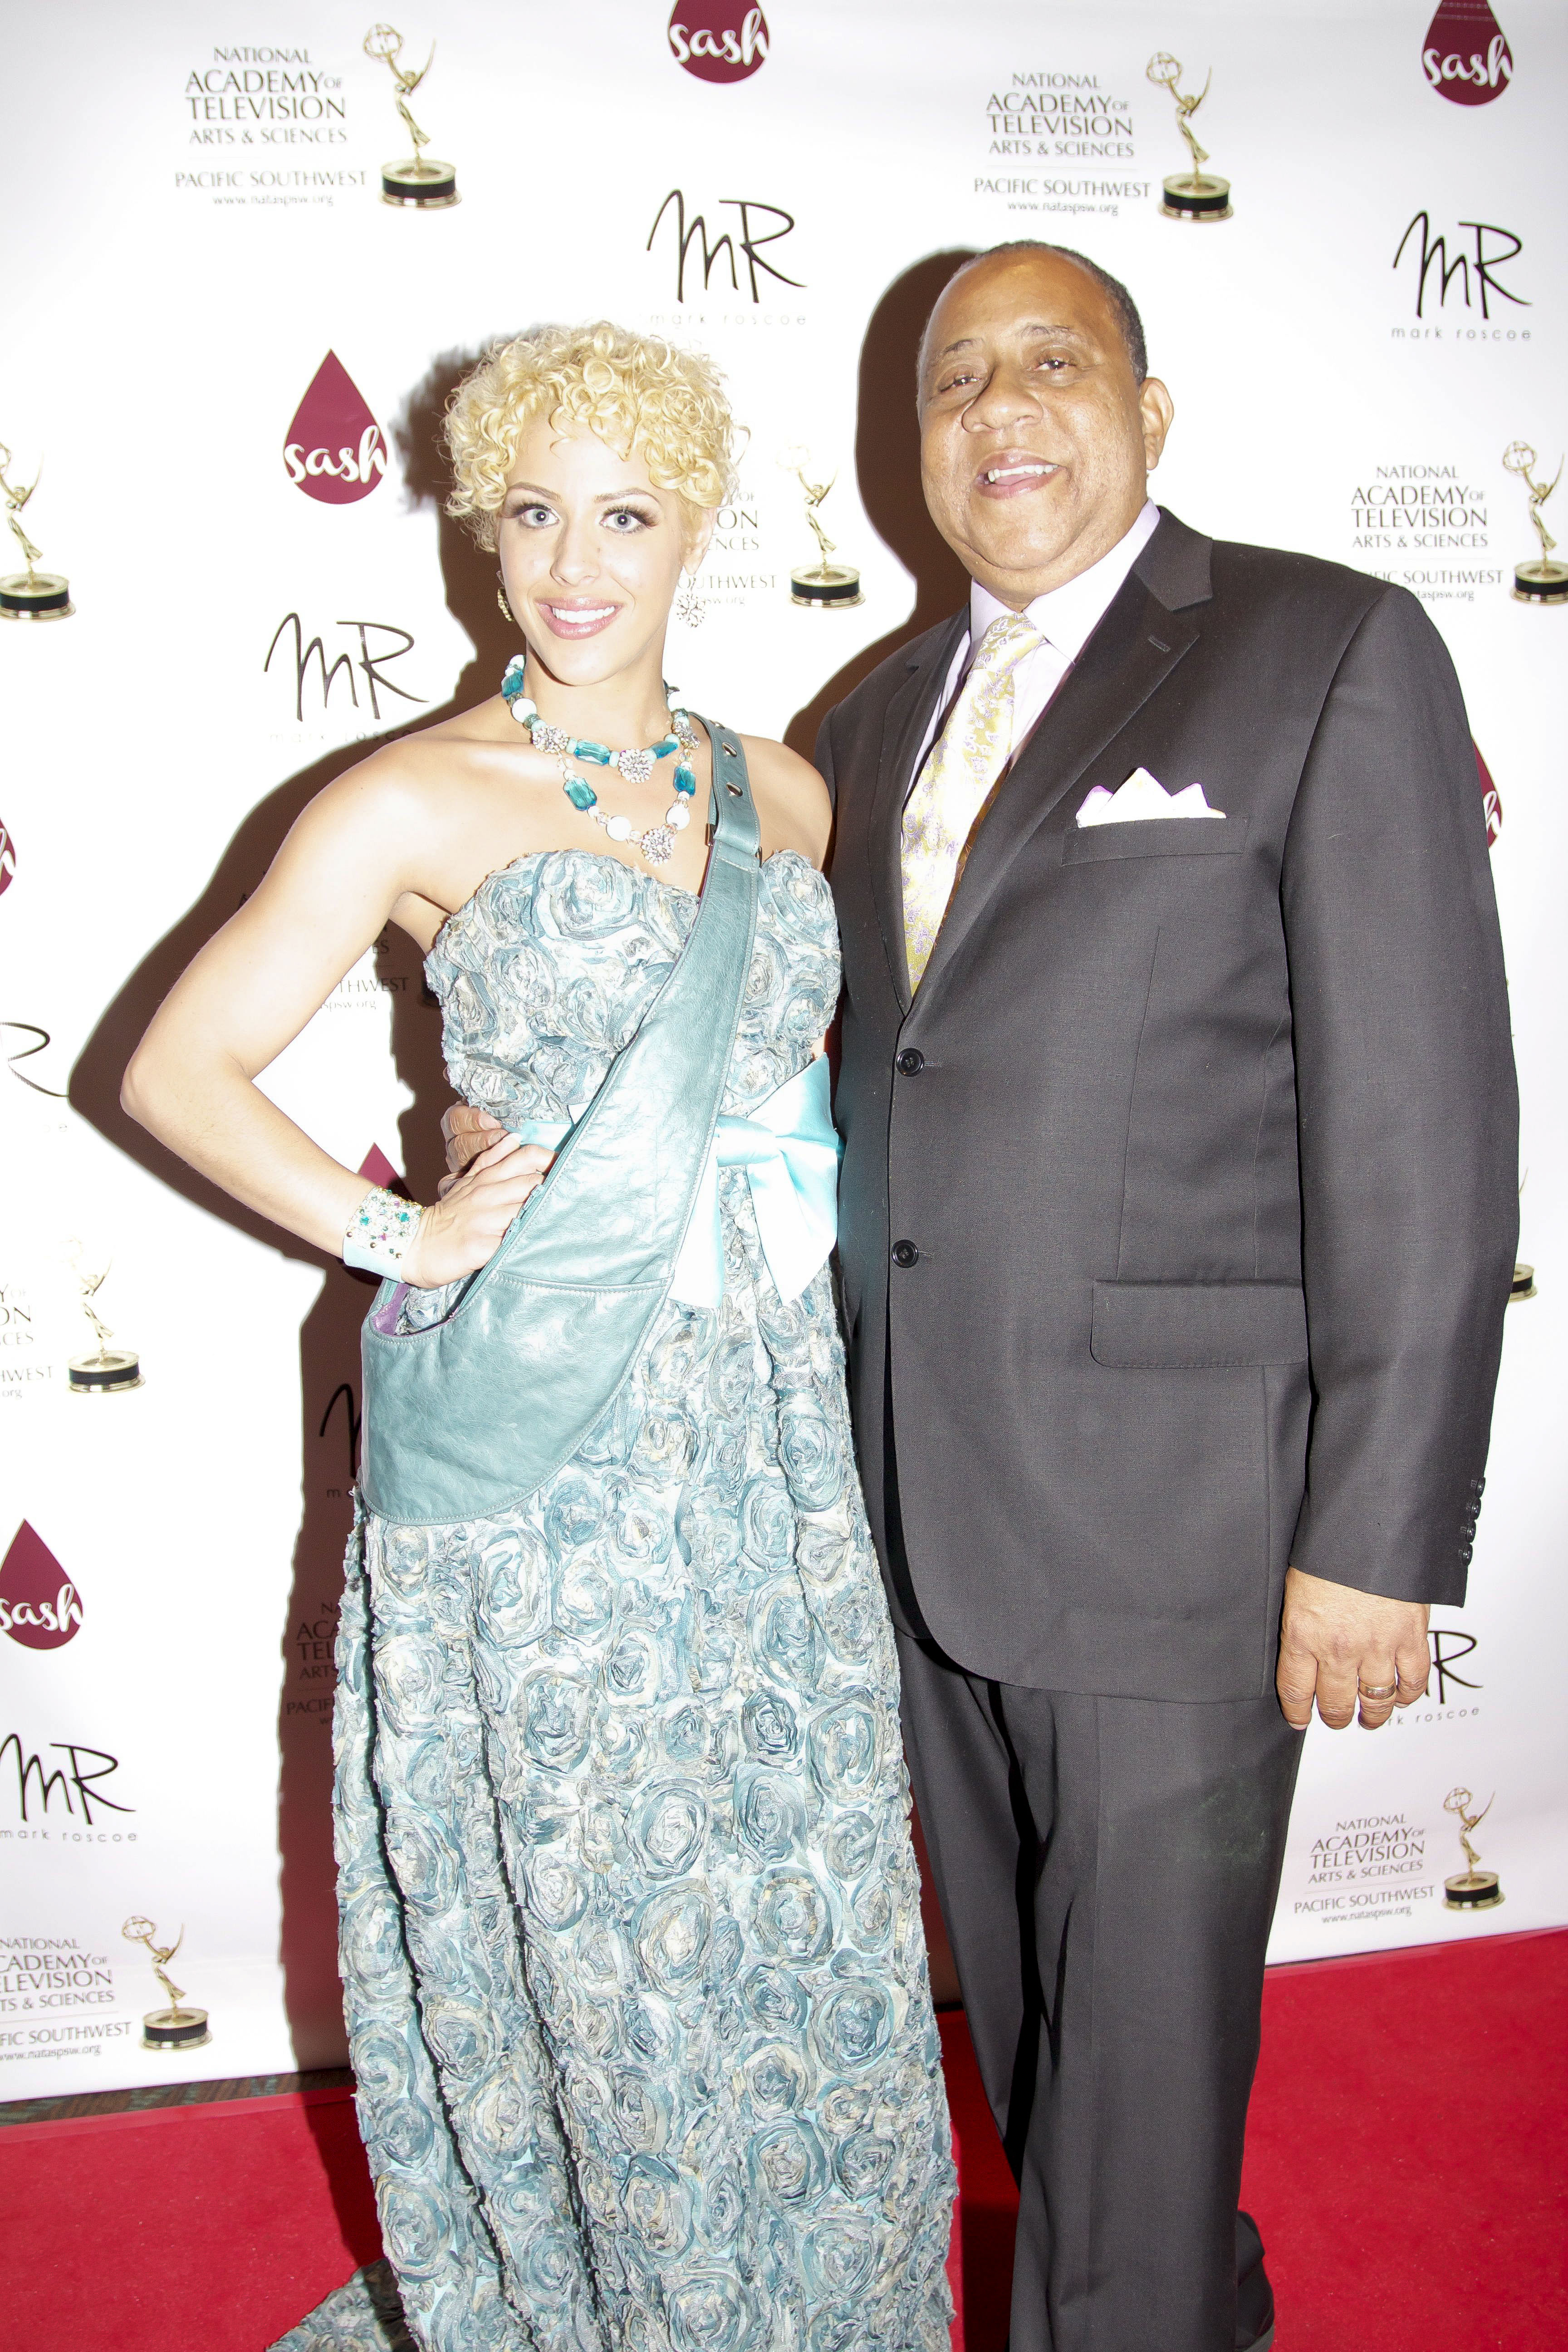 Jillisa Lynn and Emmy Host, Barry Shabaka Henley at 2013 PSW Emmy Awards